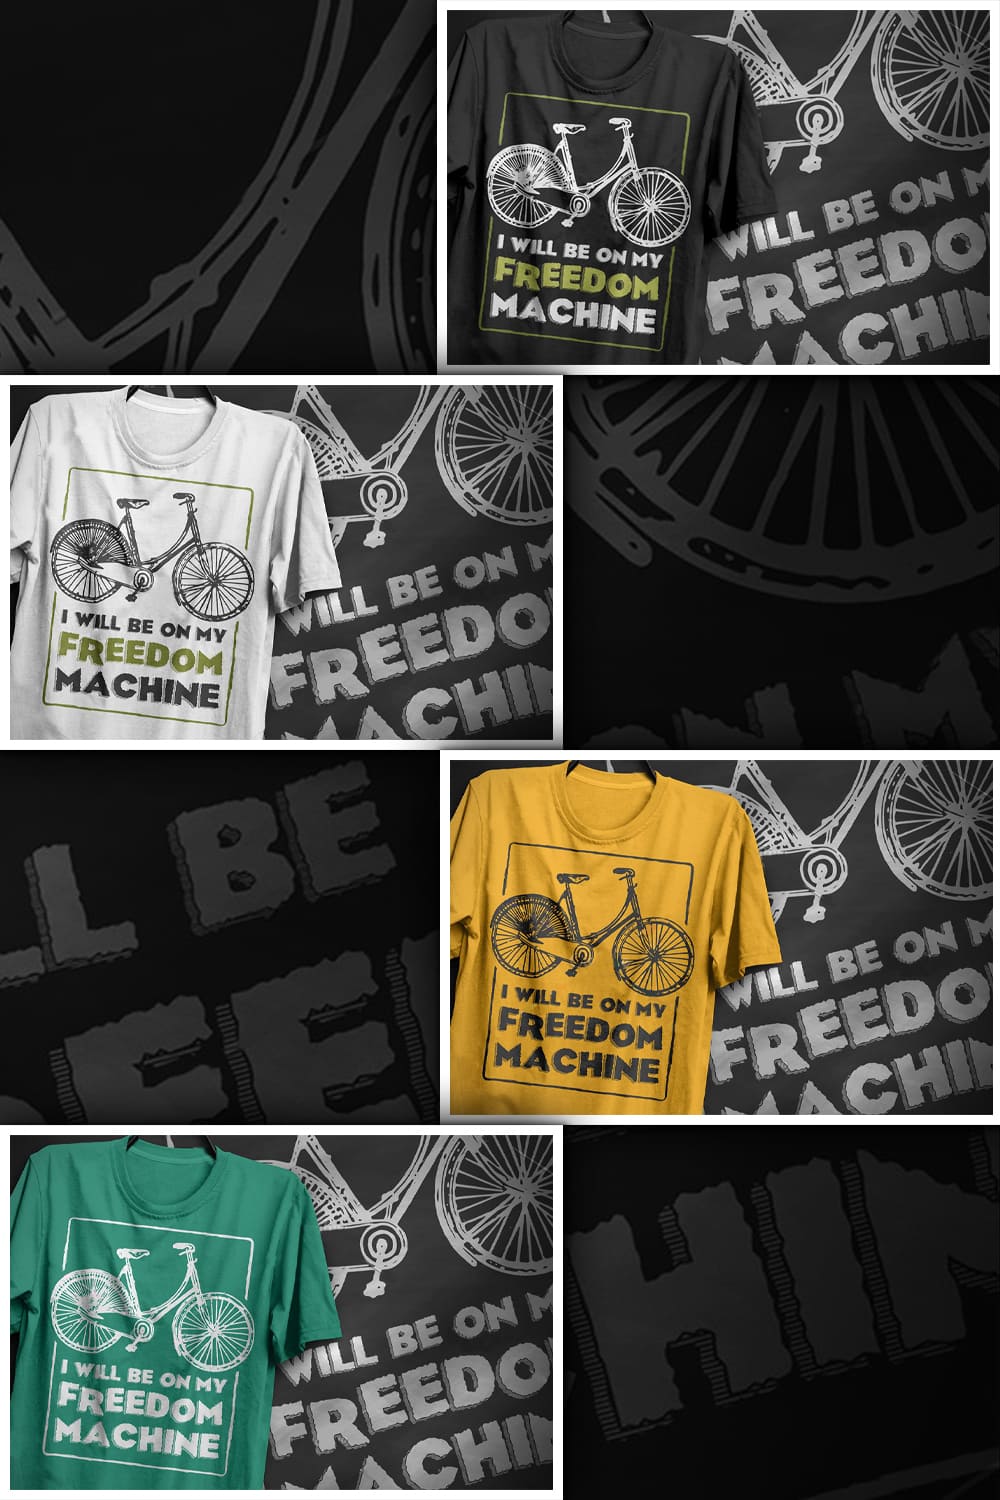 Freedom machine - T-Shirt Design - Pinterest.